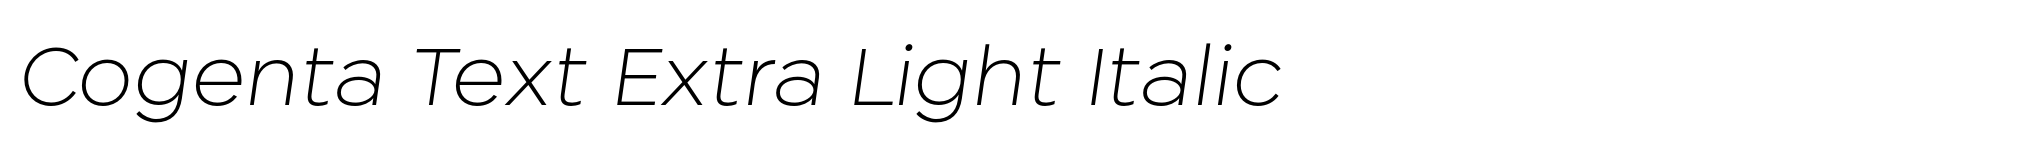 Cogenta Text Extra Light Italic image